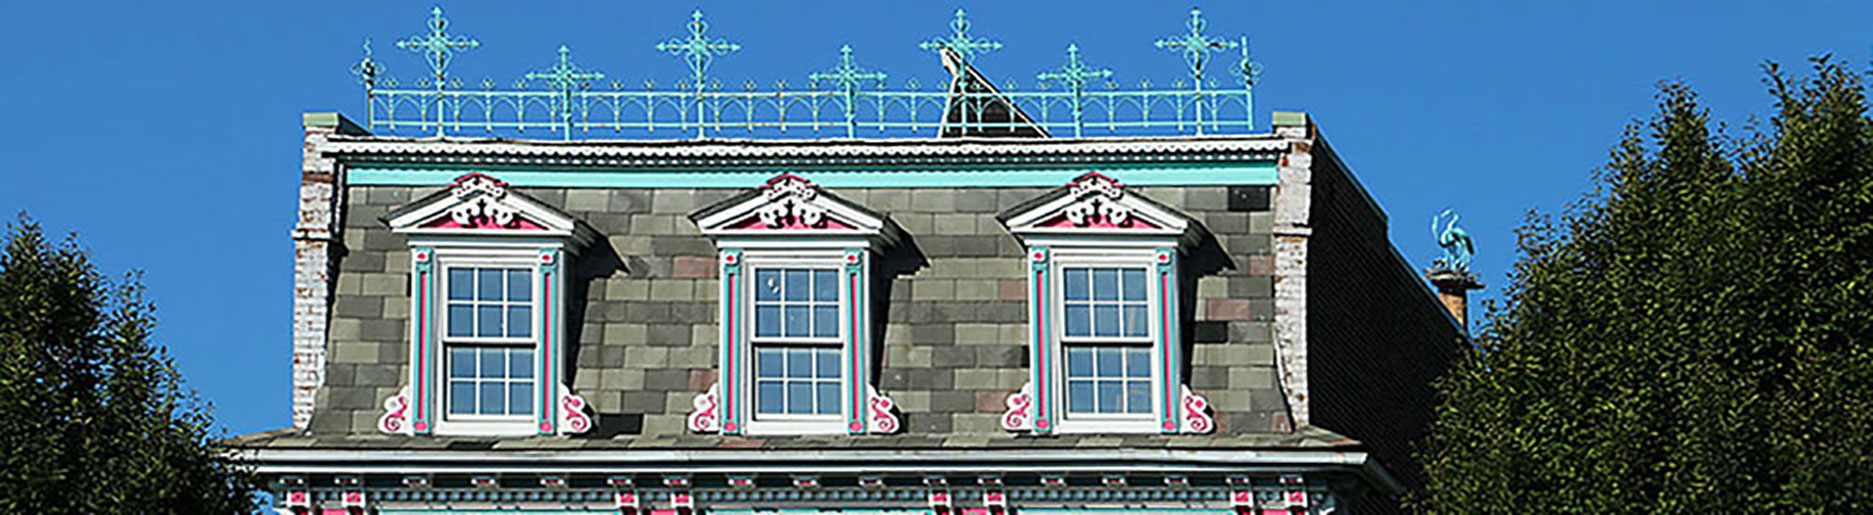 Dielmann Kaiser House Roof